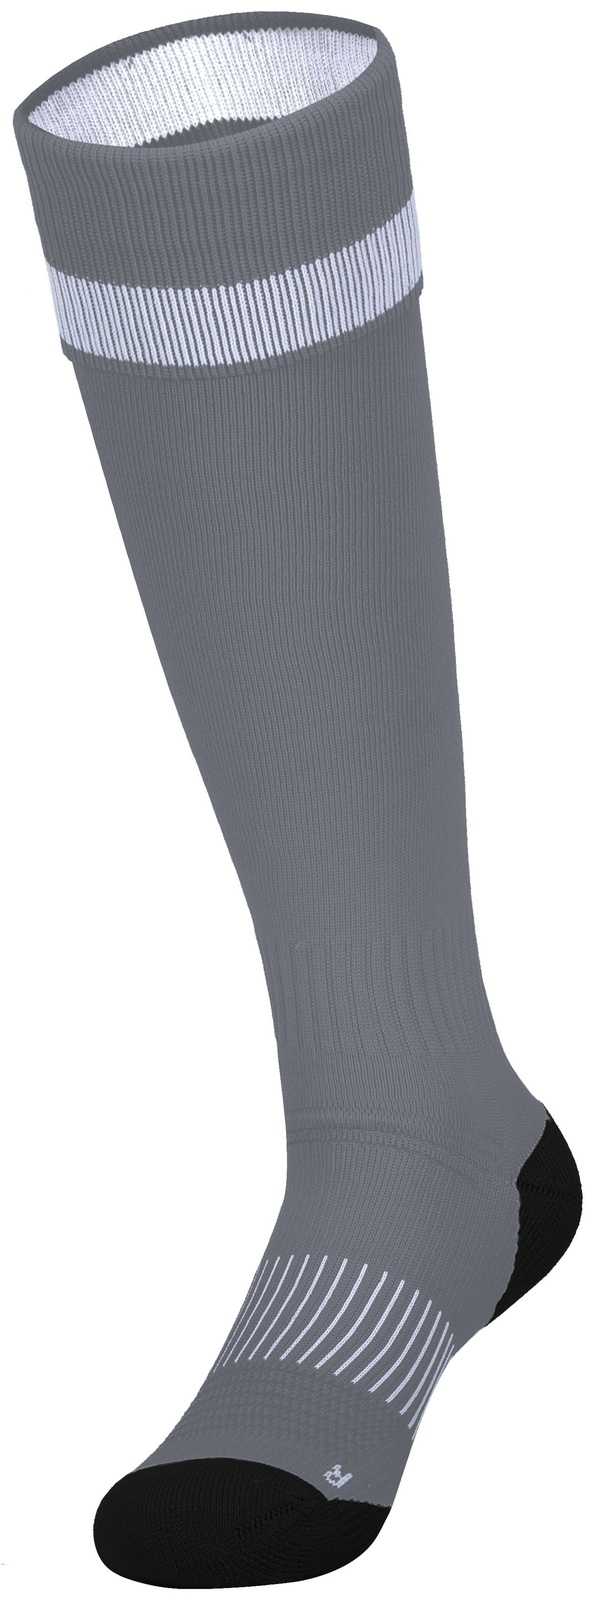 High Five 329120 Impact+ Soccer Sock - Graphite White Black - HIT a Double